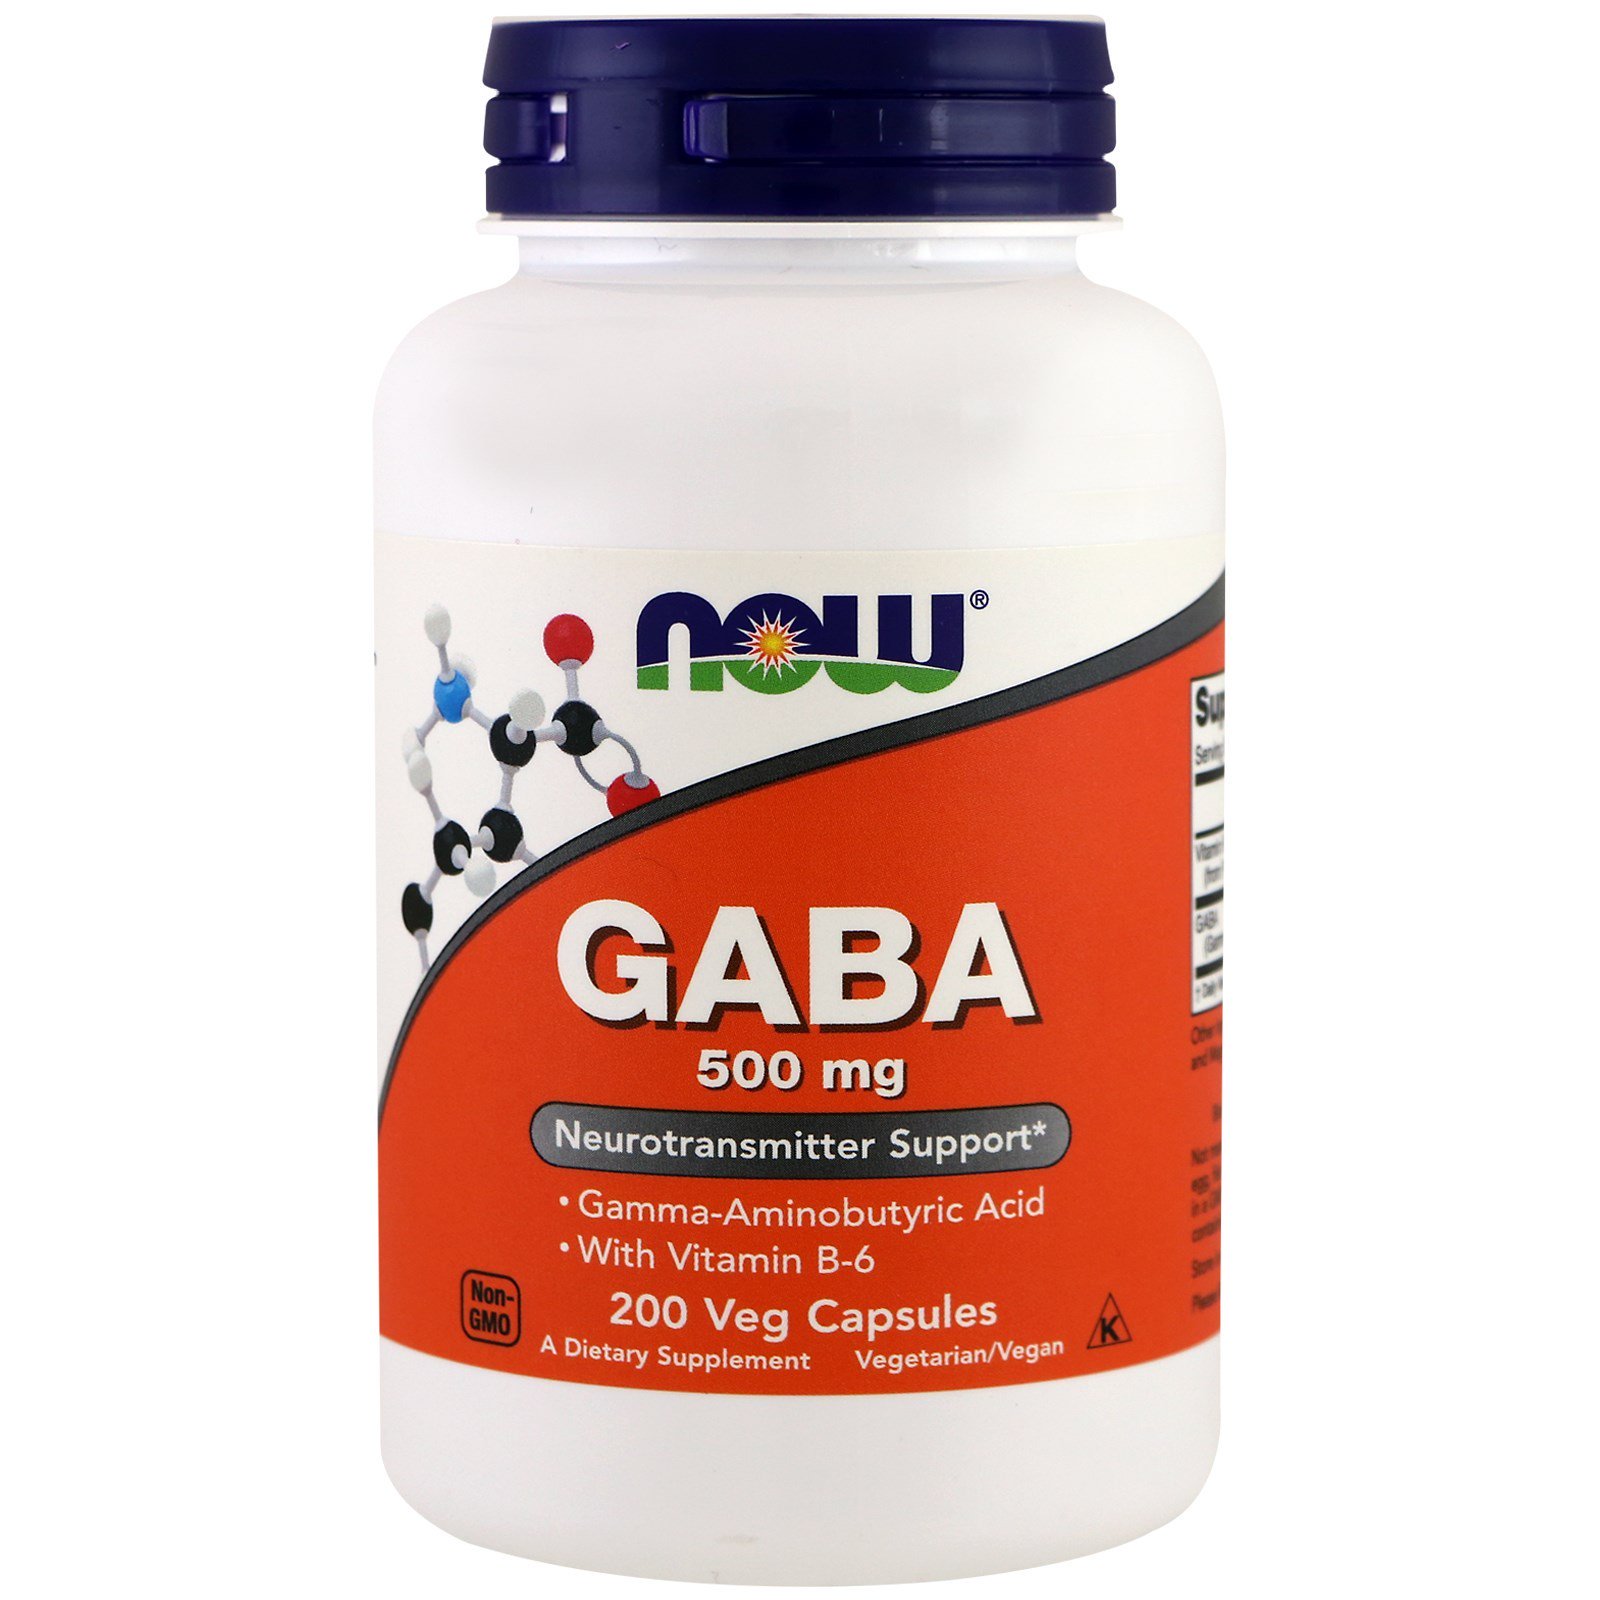 NOW GABA, ГАБА Гамма-Аминомасляная Кислота (ГАМК) 500 мг - 200 капсул